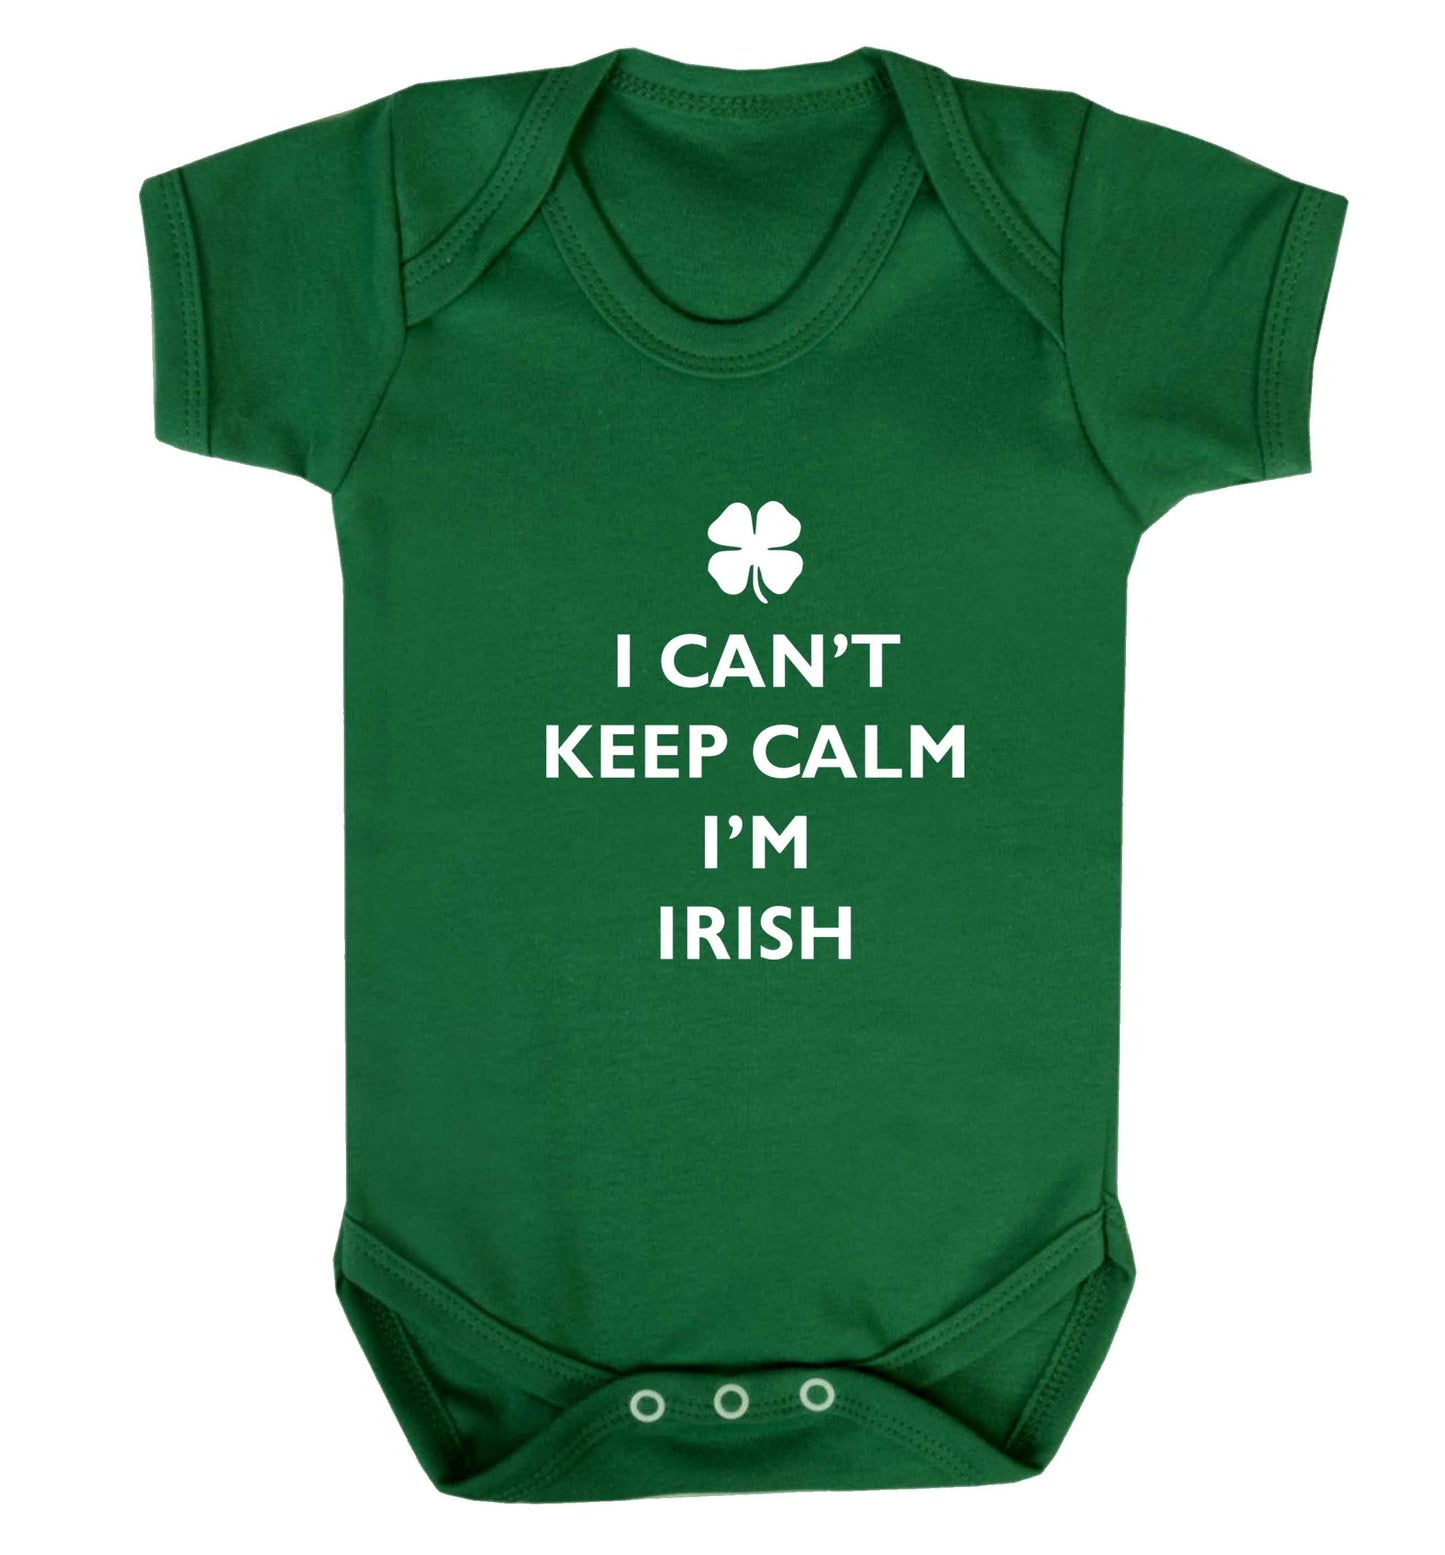 I can't keep calm I'm Irish baby vest green 18-24 months